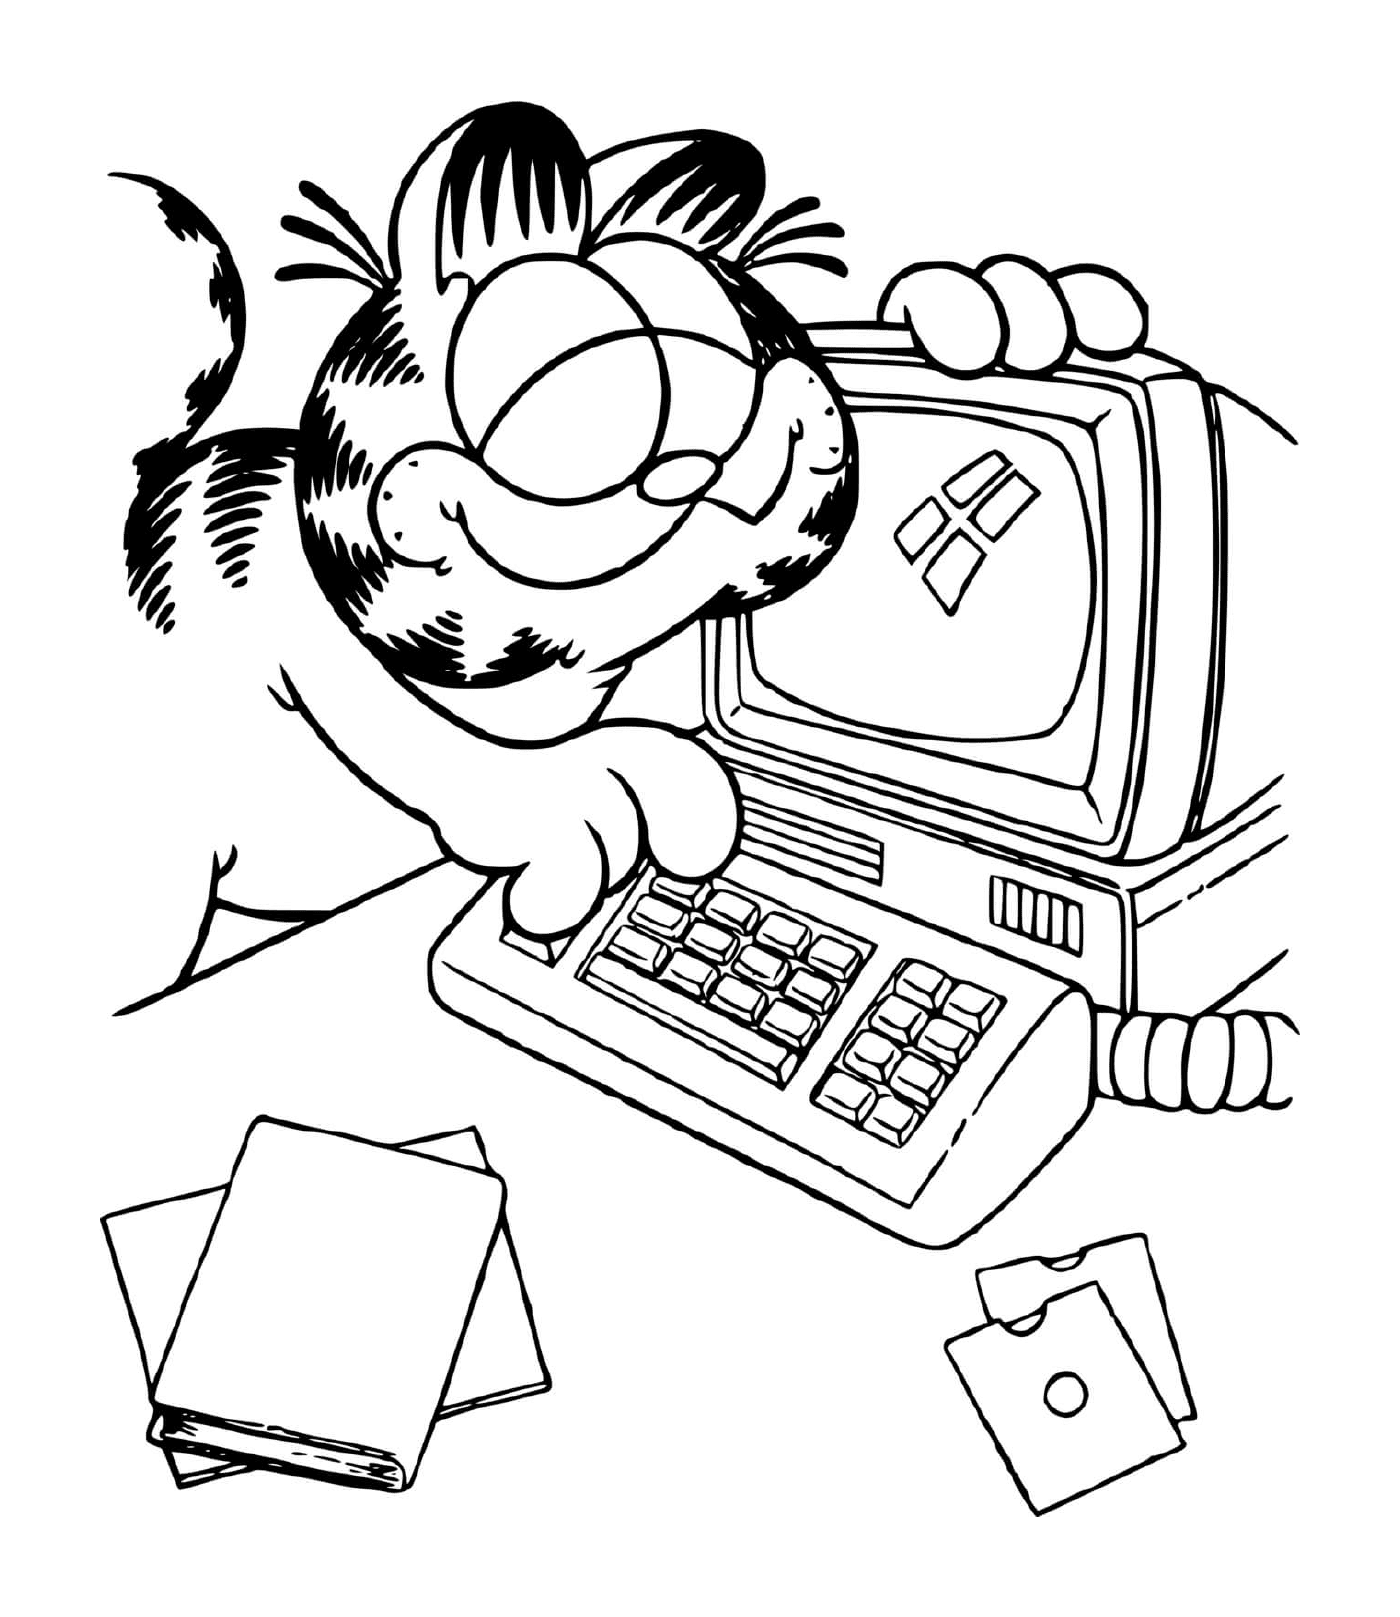  Garfield uses a computer 